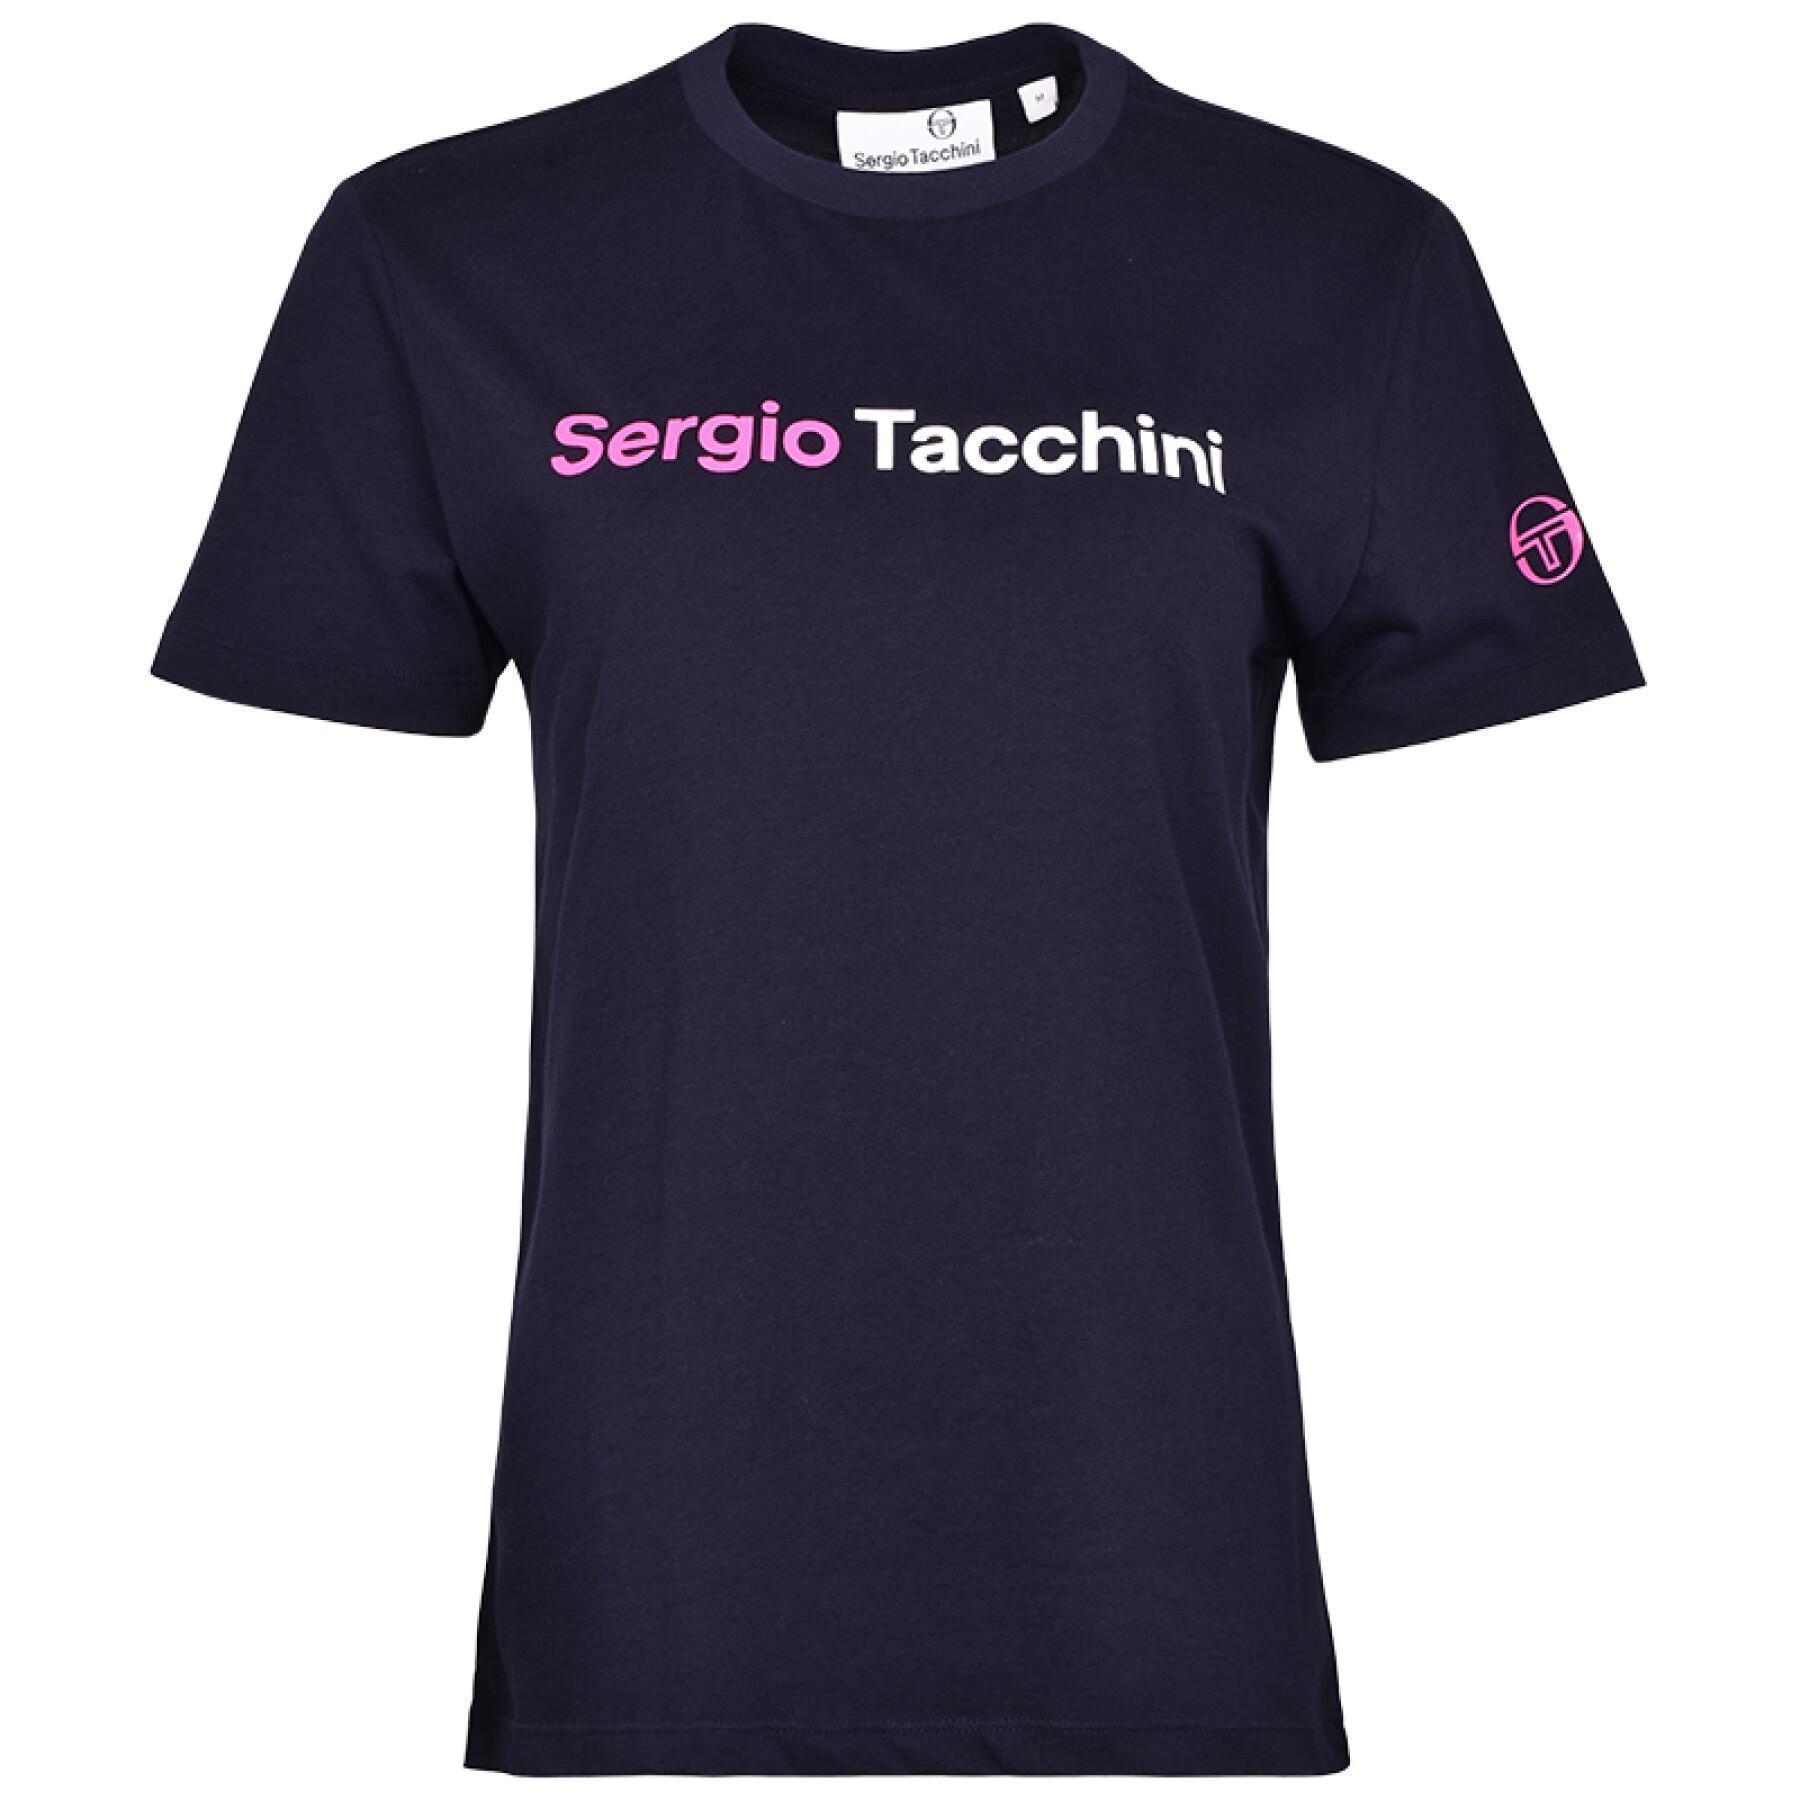 T-shirt femme Sergio Tacchini Robin